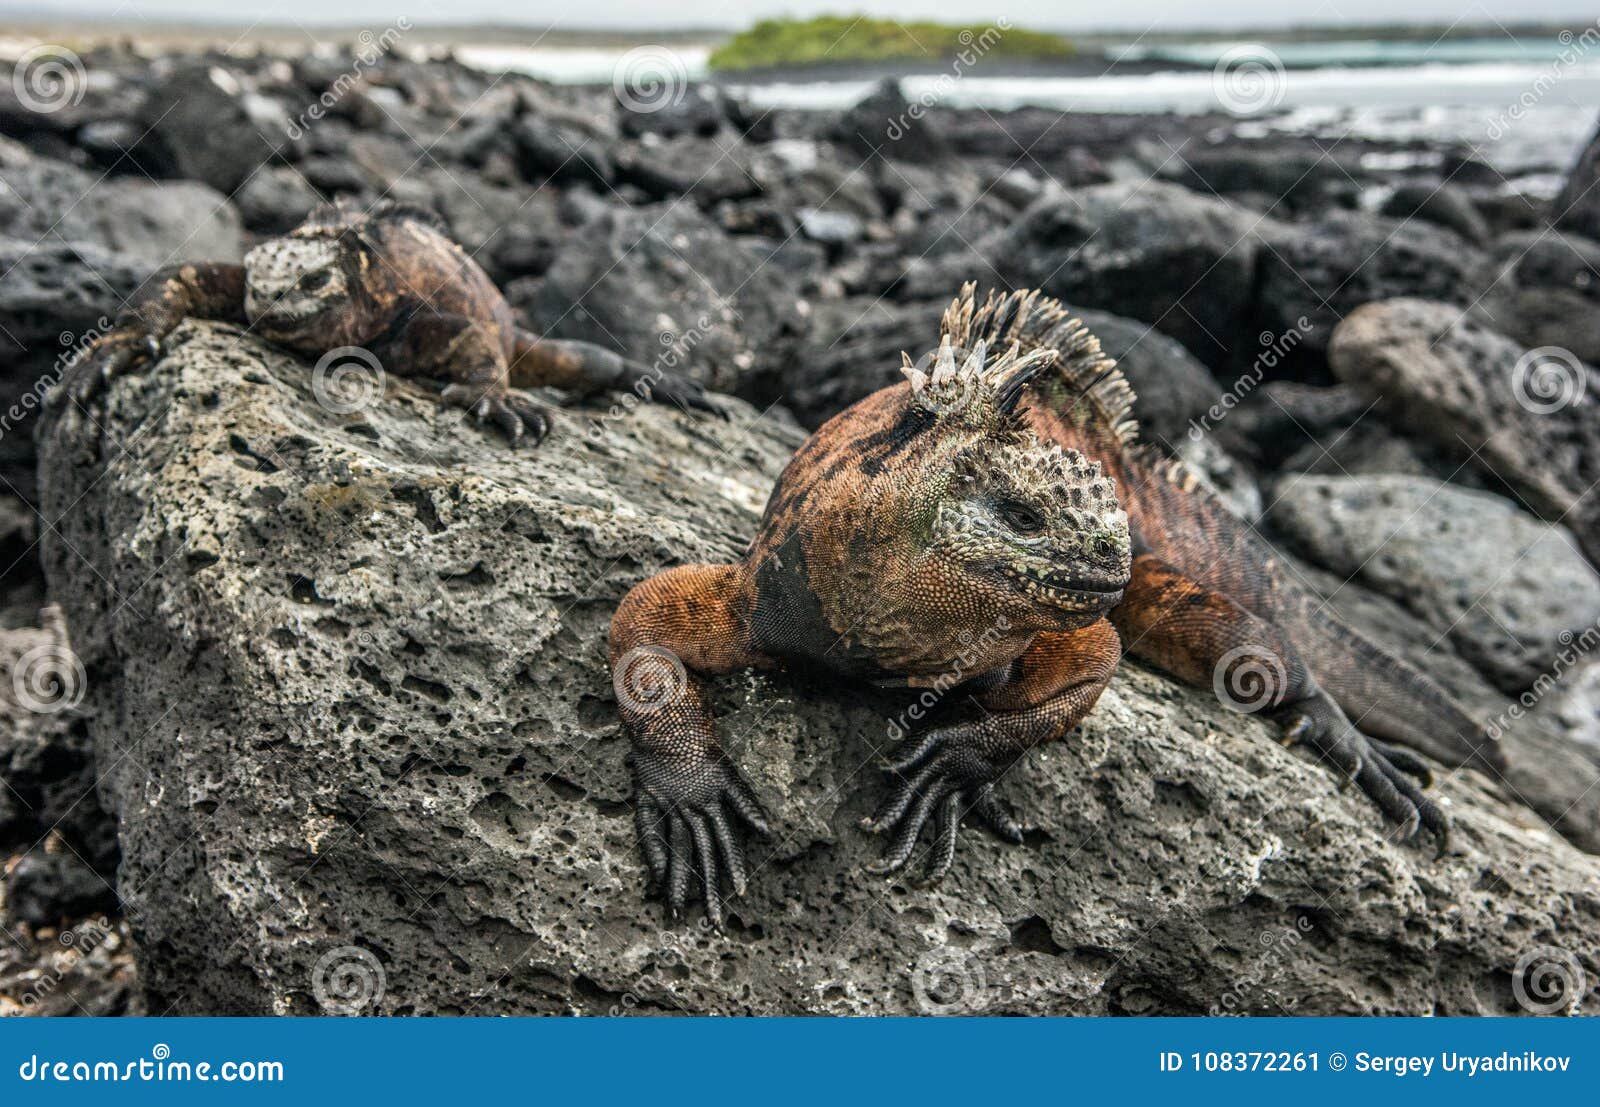 a male of galapagos marine iguana resting on lava rocks amblyrhynchus cristatus.